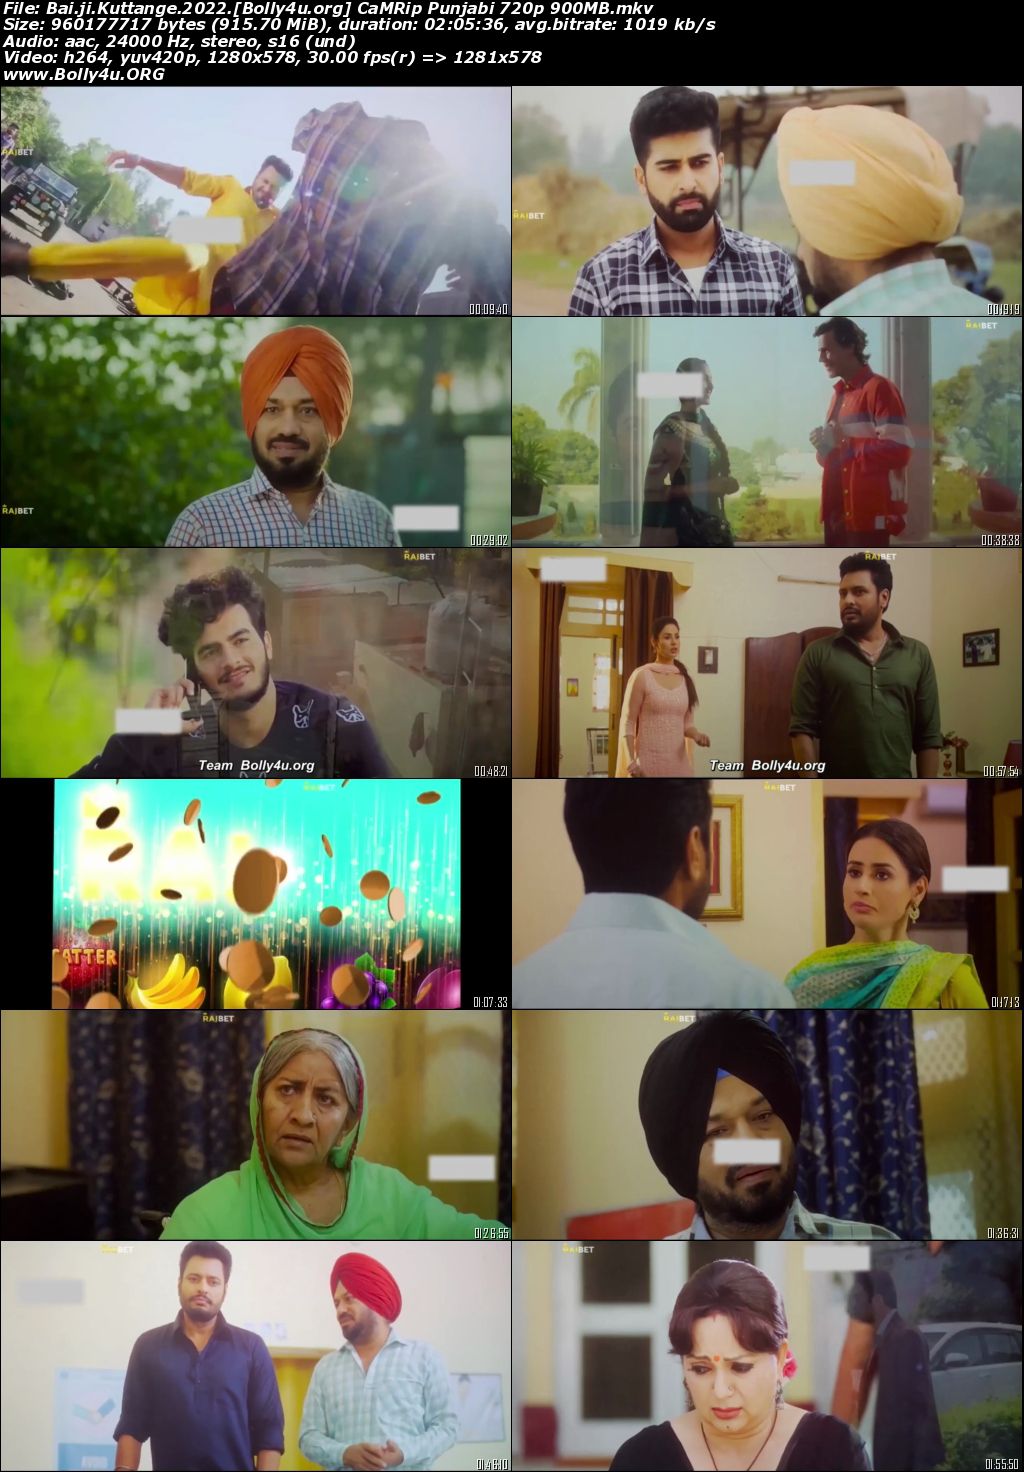 Bai Ji Kuttange 2022 CAMRip Punjabi Full Movie Download 720p 480p